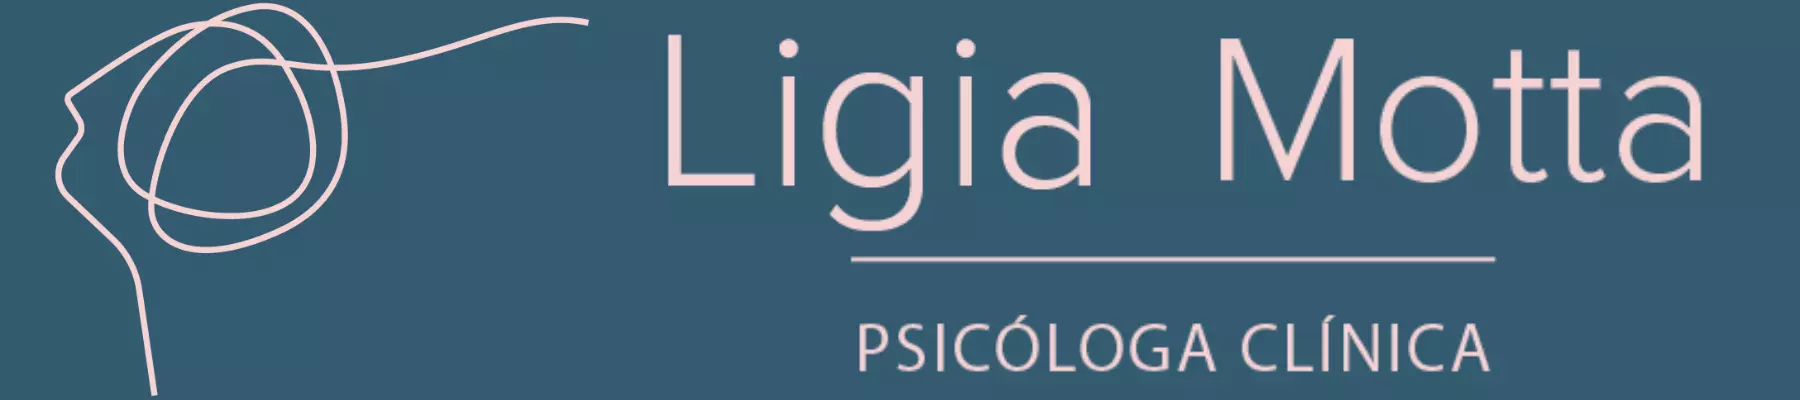 Ligia Motta - Psicologia Clínica